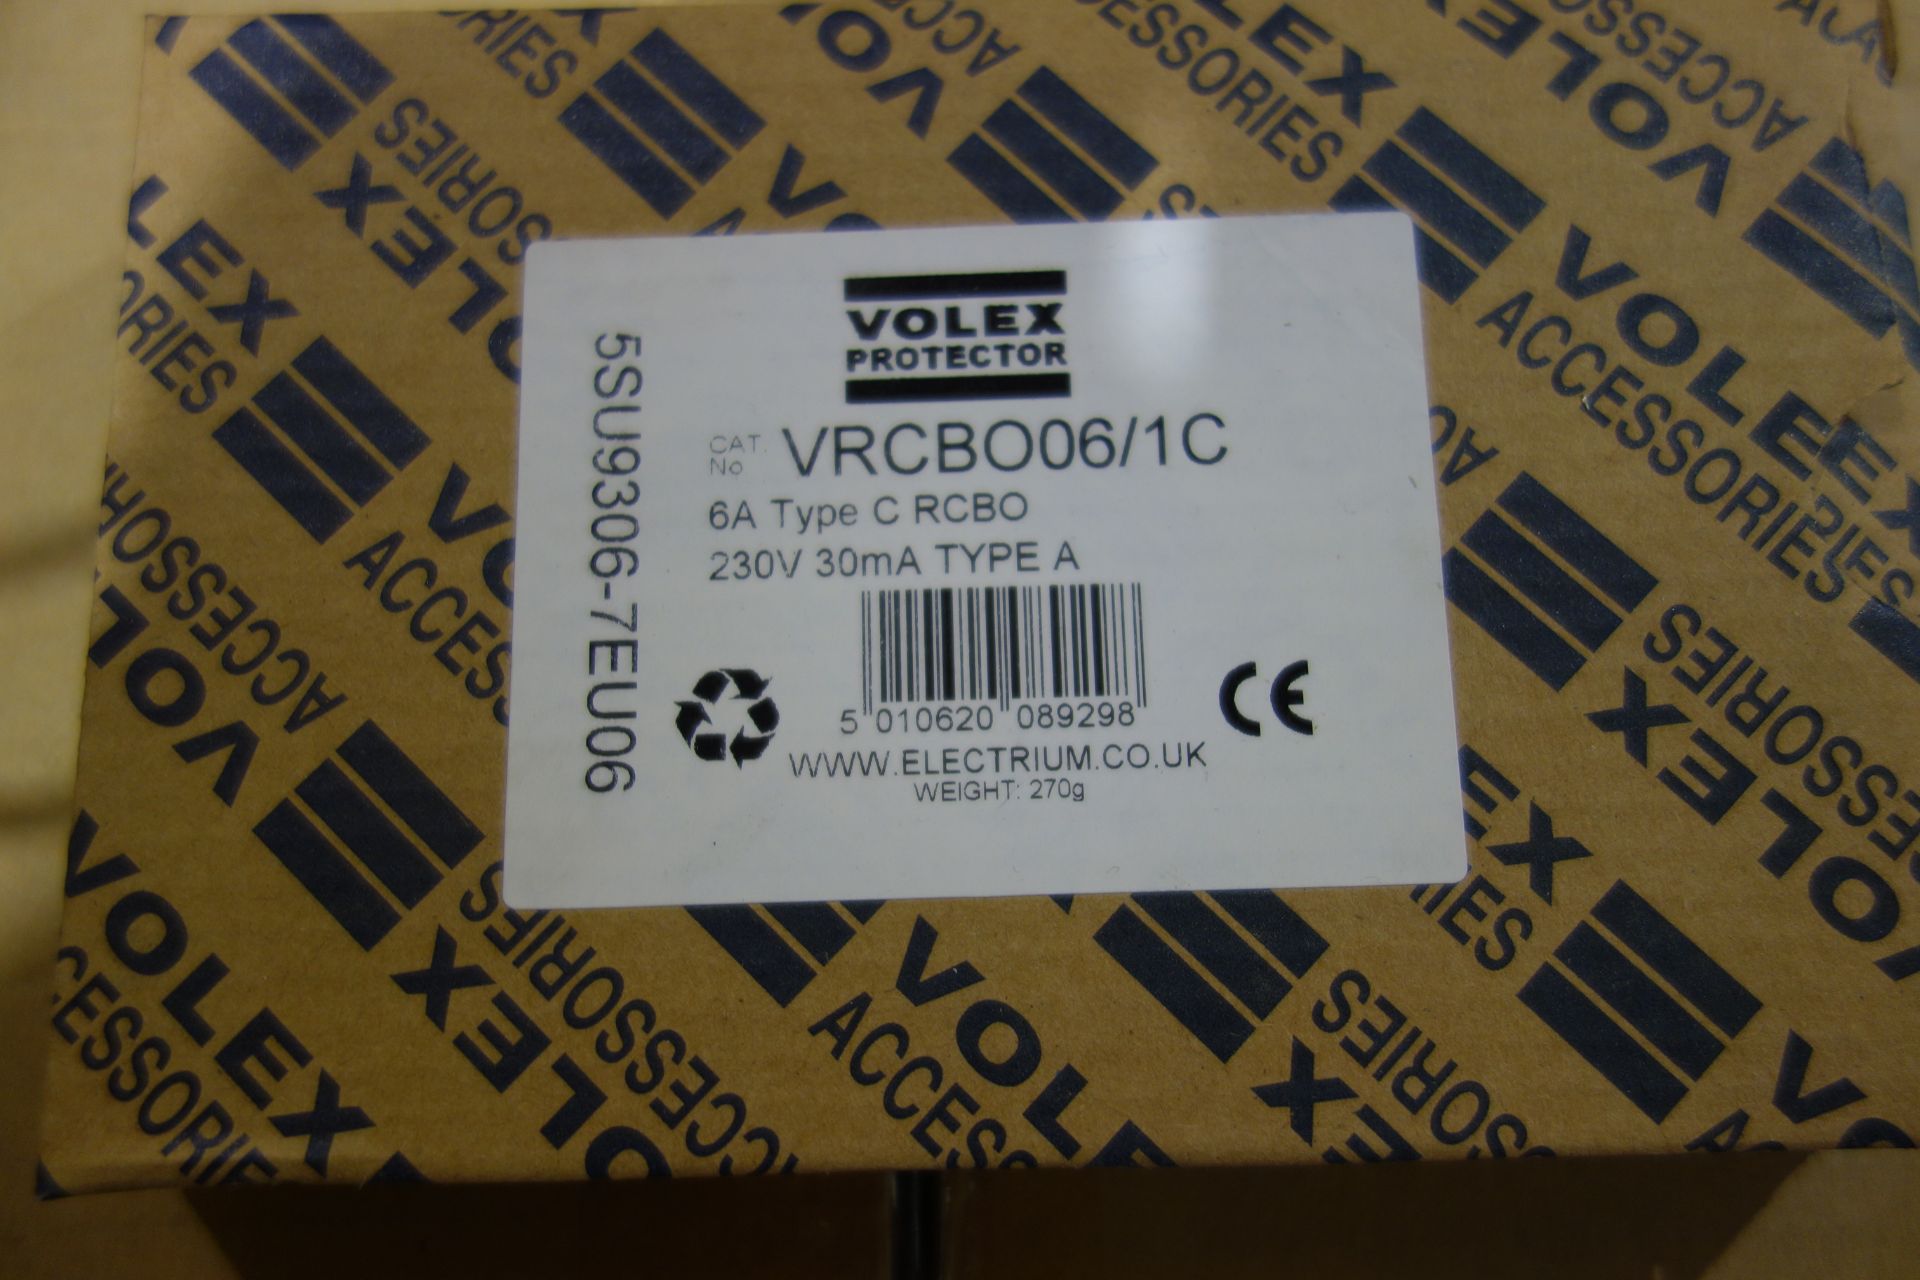 25 X Volex VRCB006/IC 6A Type C RCBOS 230V 30MA